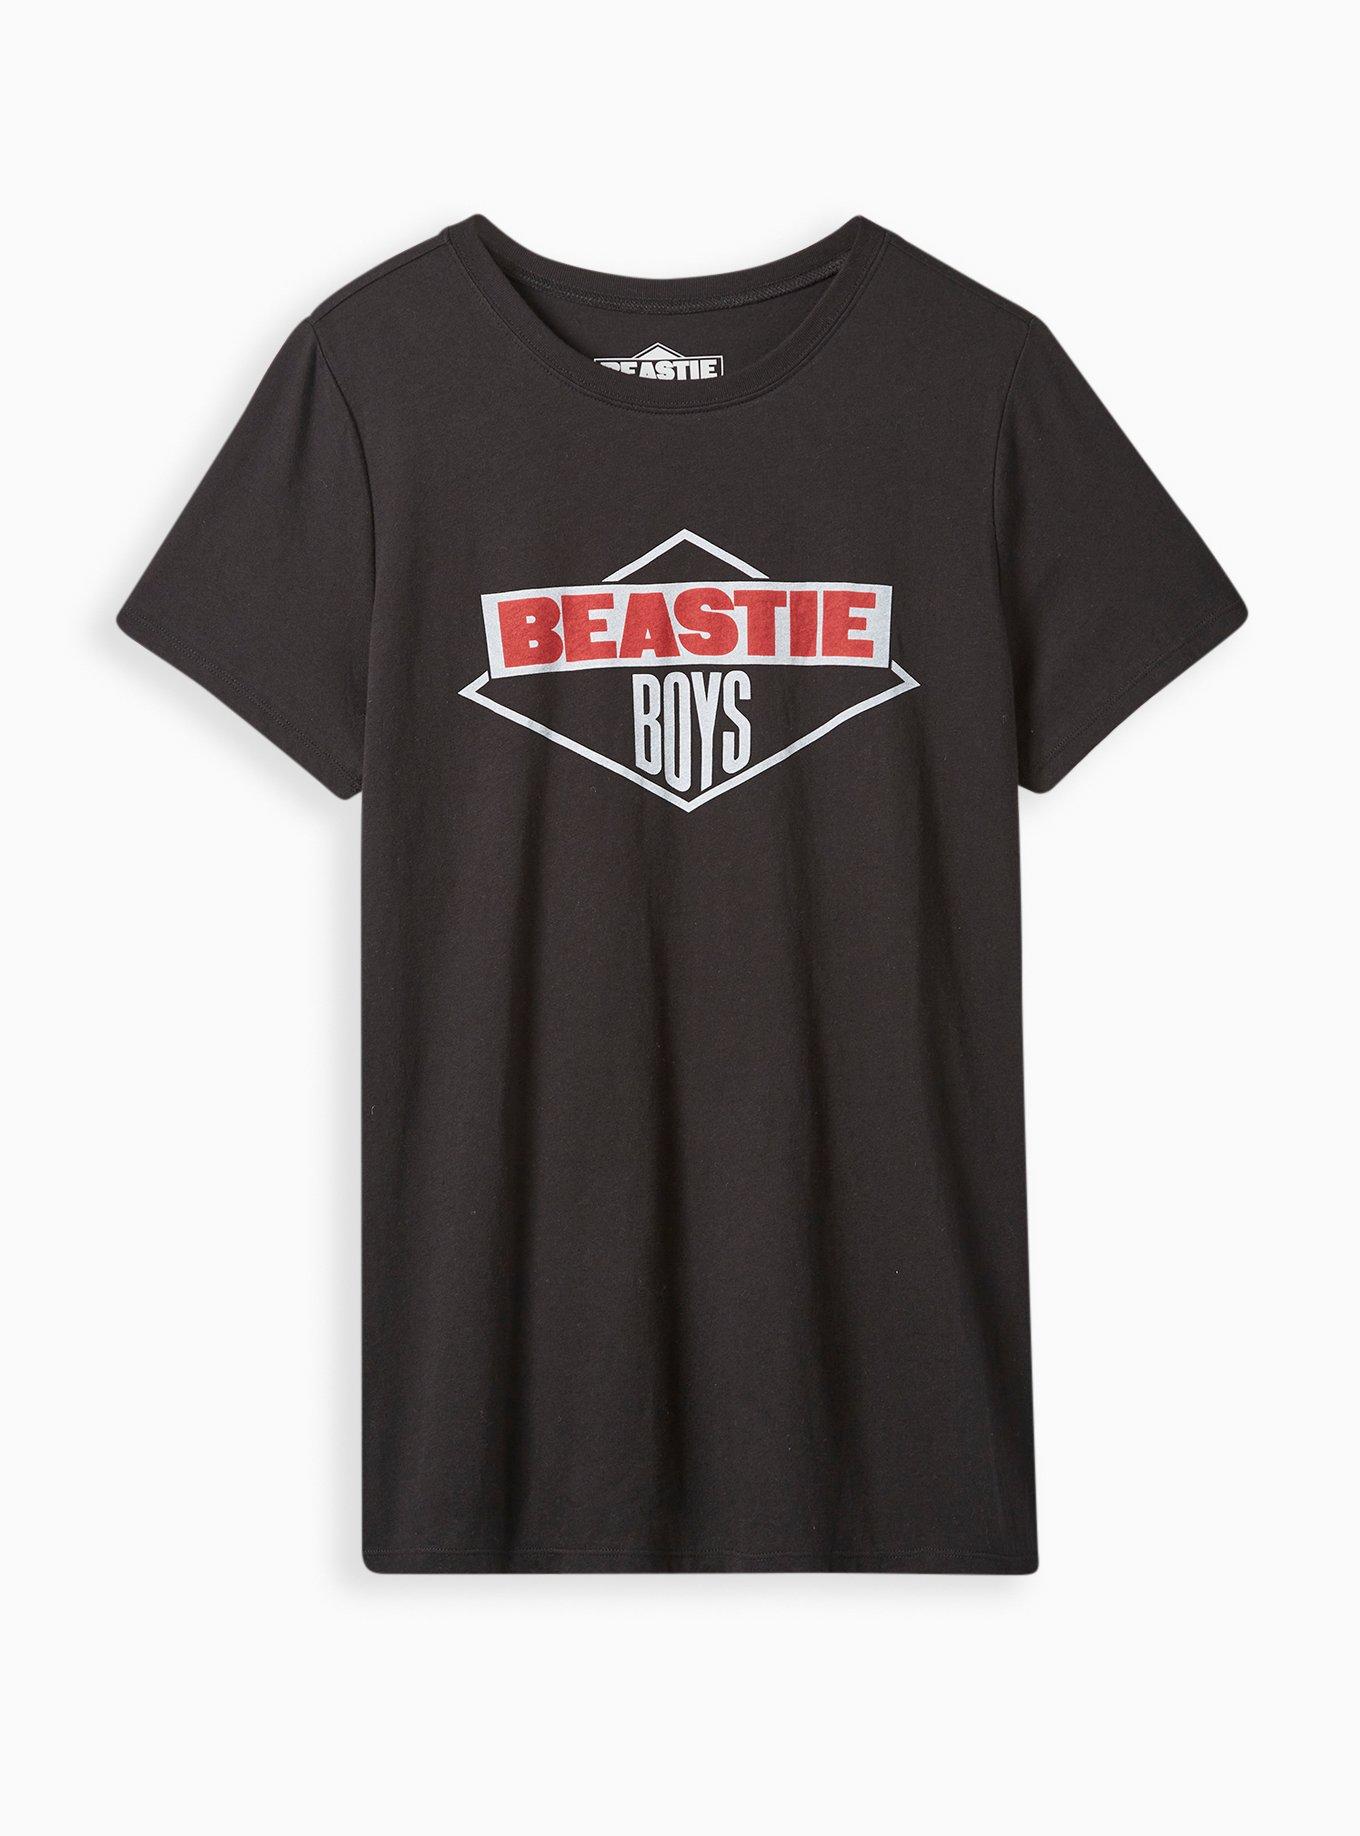 Plus Size - Beastie Boys Classic Fit Crew Top - Cotton Black - Torrid